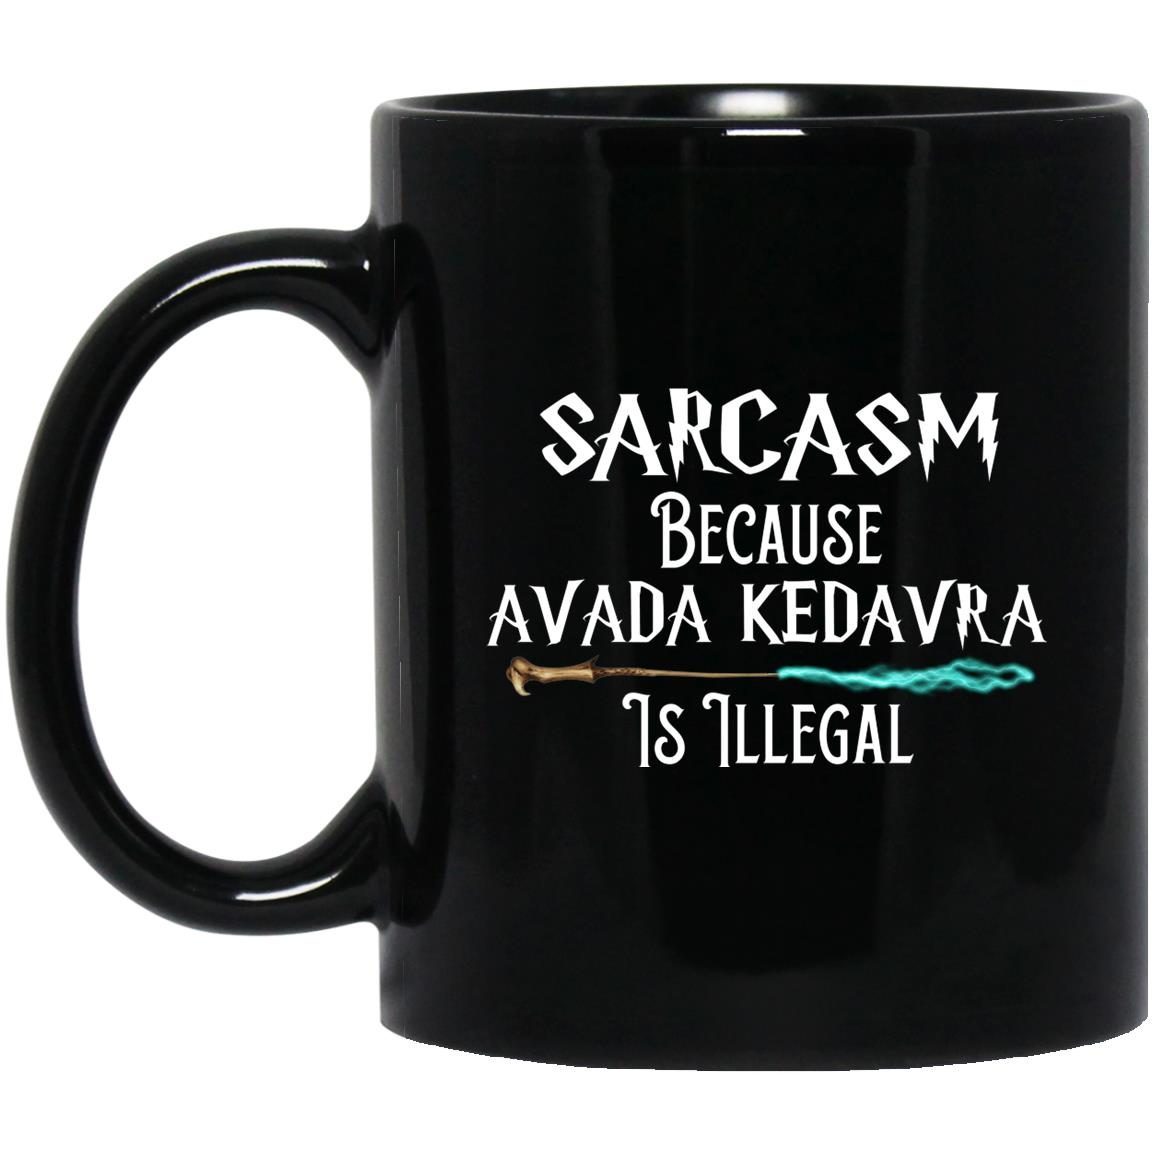 Sarcasm Because Avada Kedavra Is Illegal shirt 9